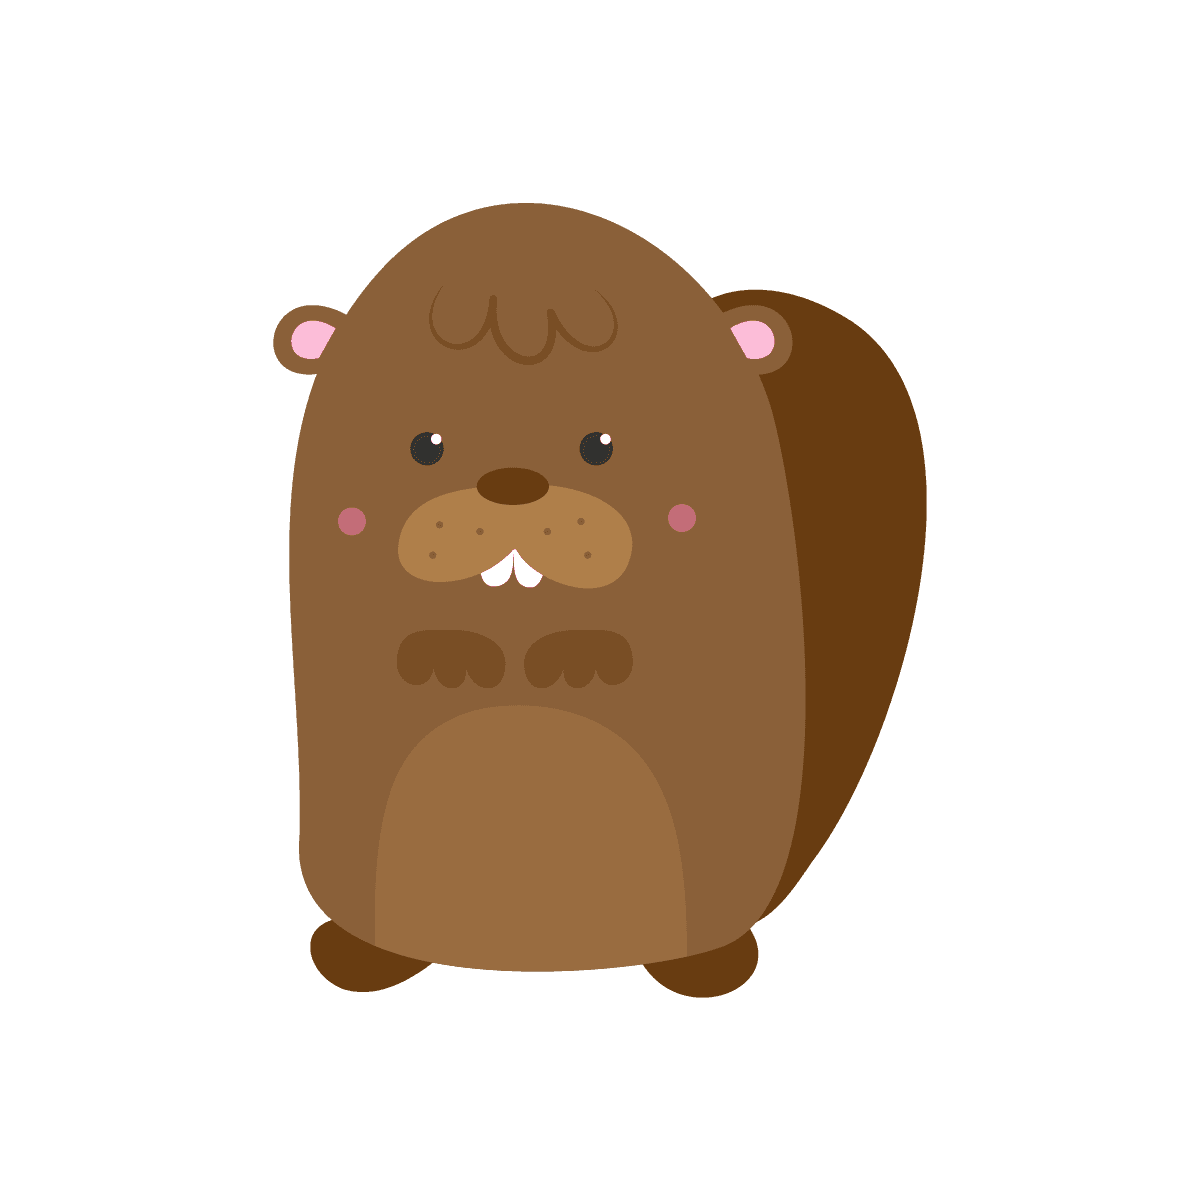 adorable cartoon beaver in warm brown colors